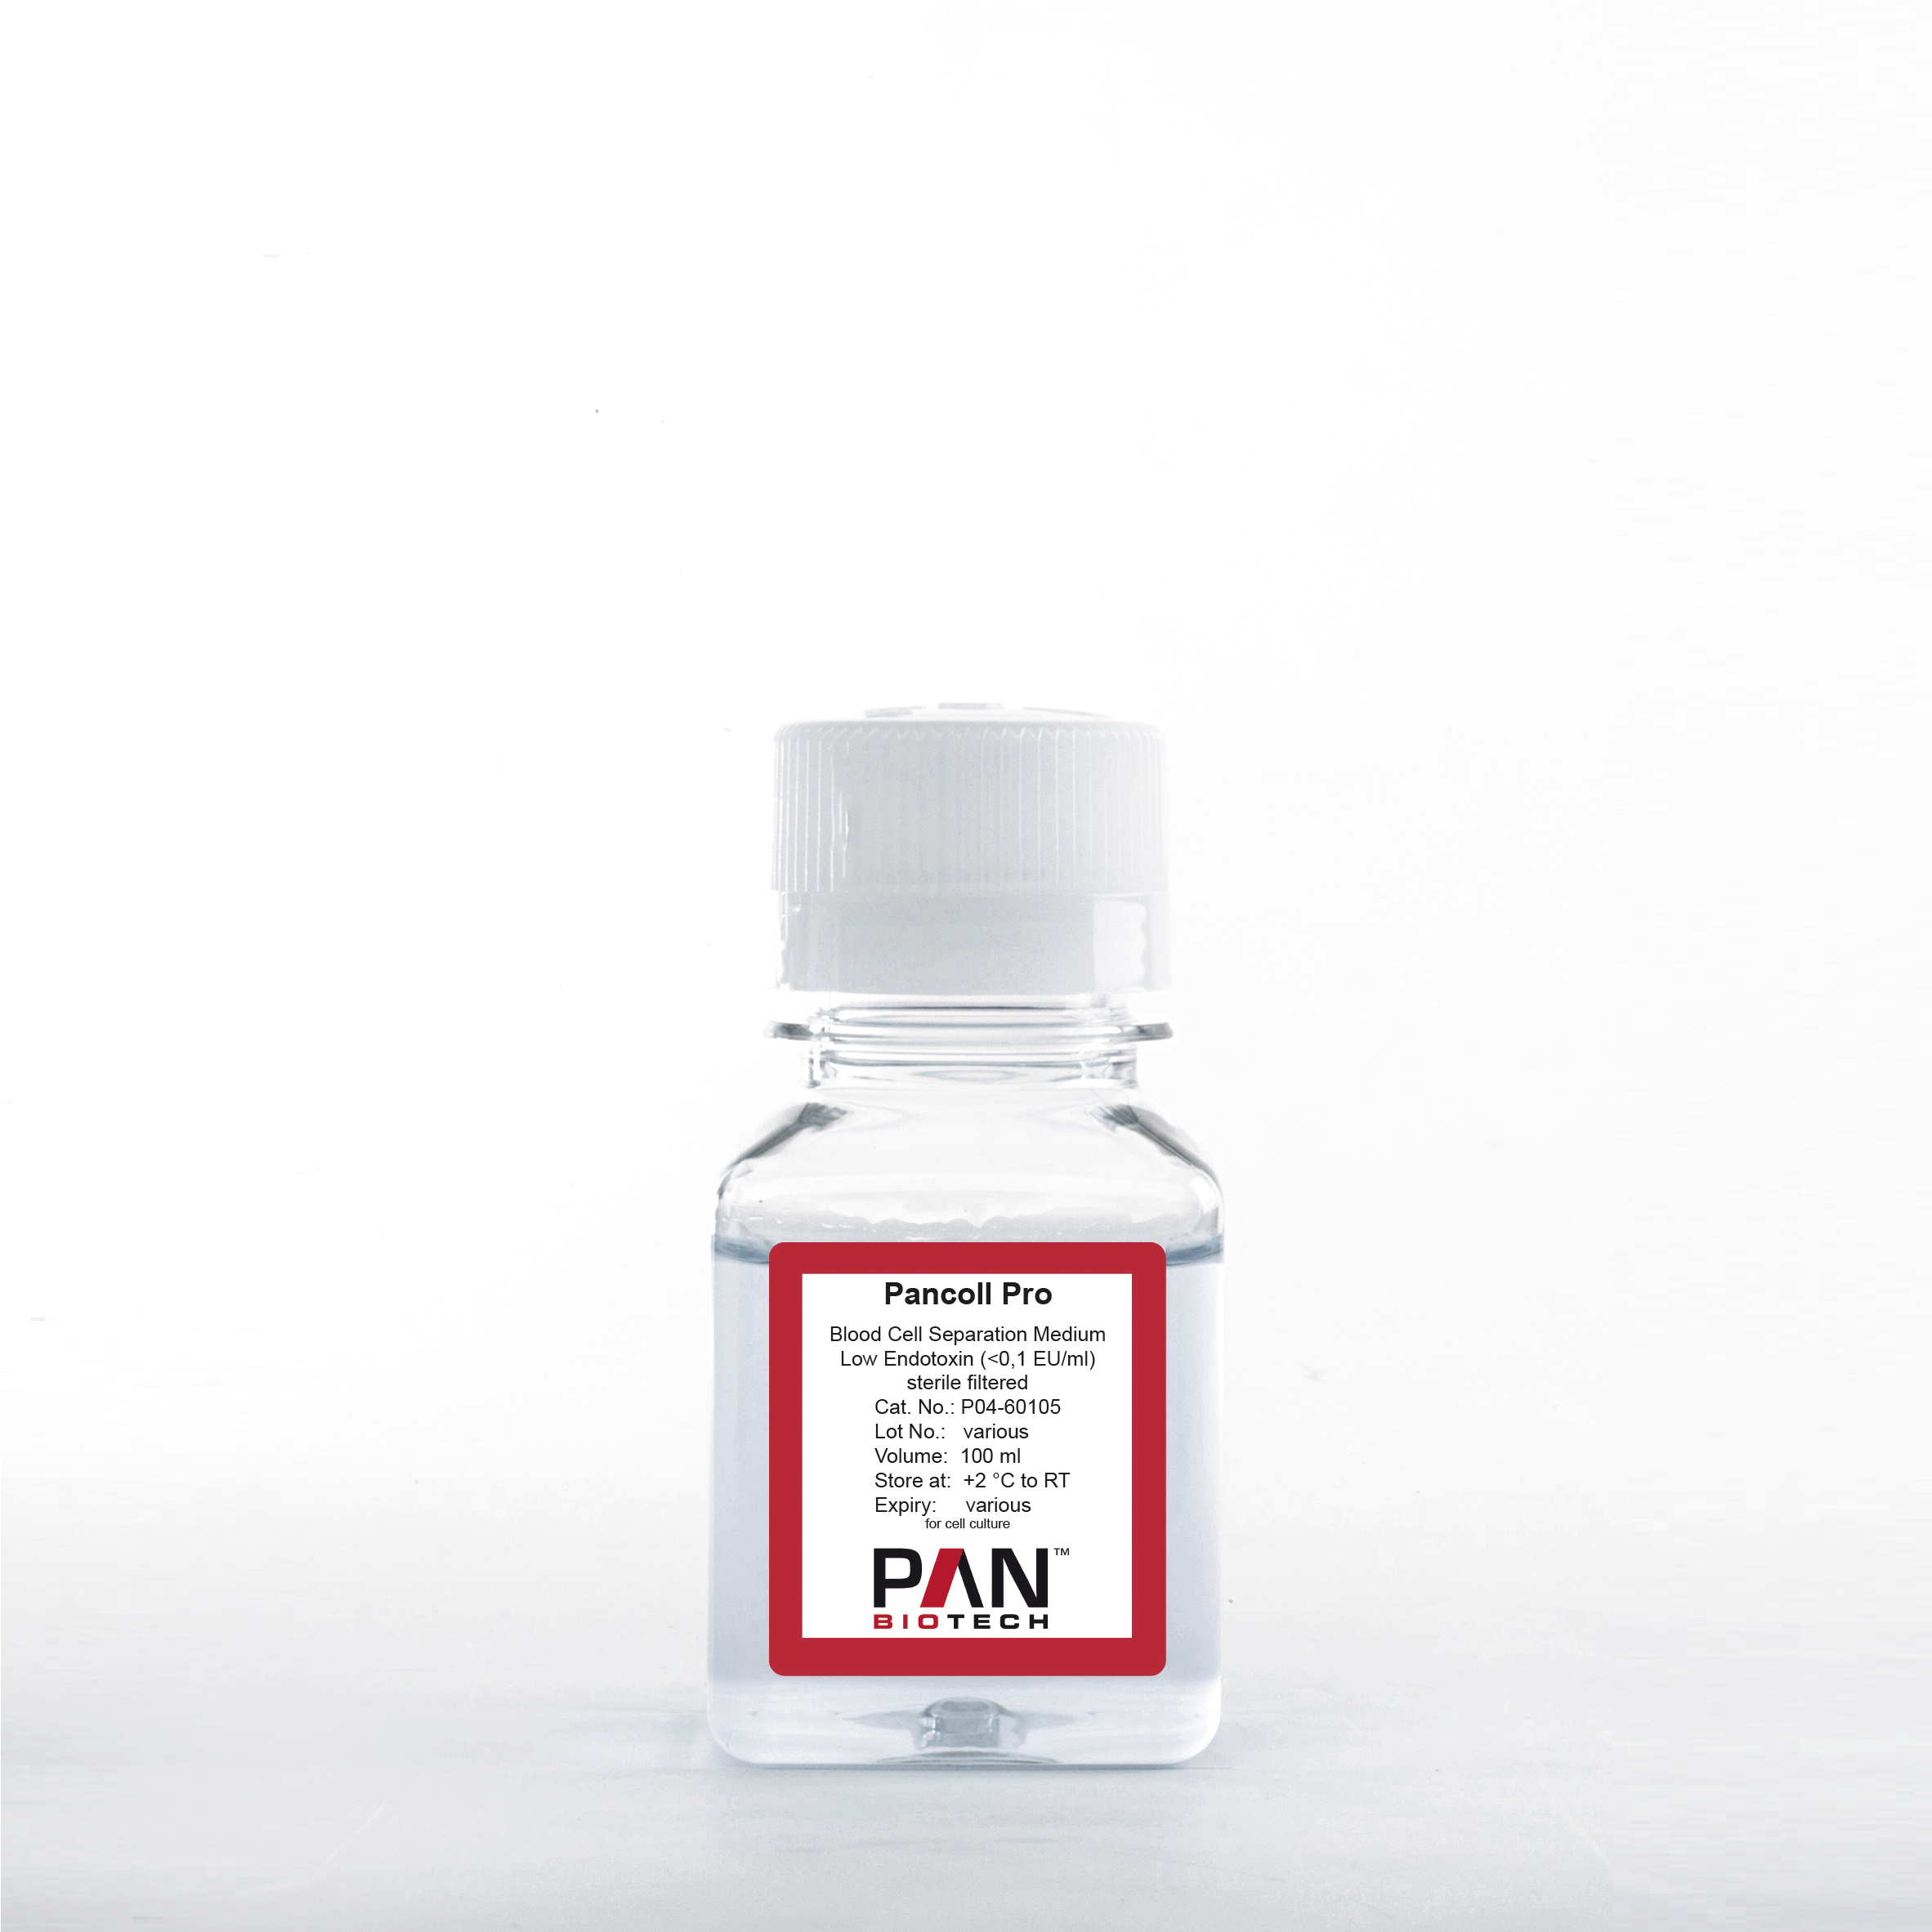 Pancoll Pro, Blood Cell Separation Medium, Low Endotoxin (